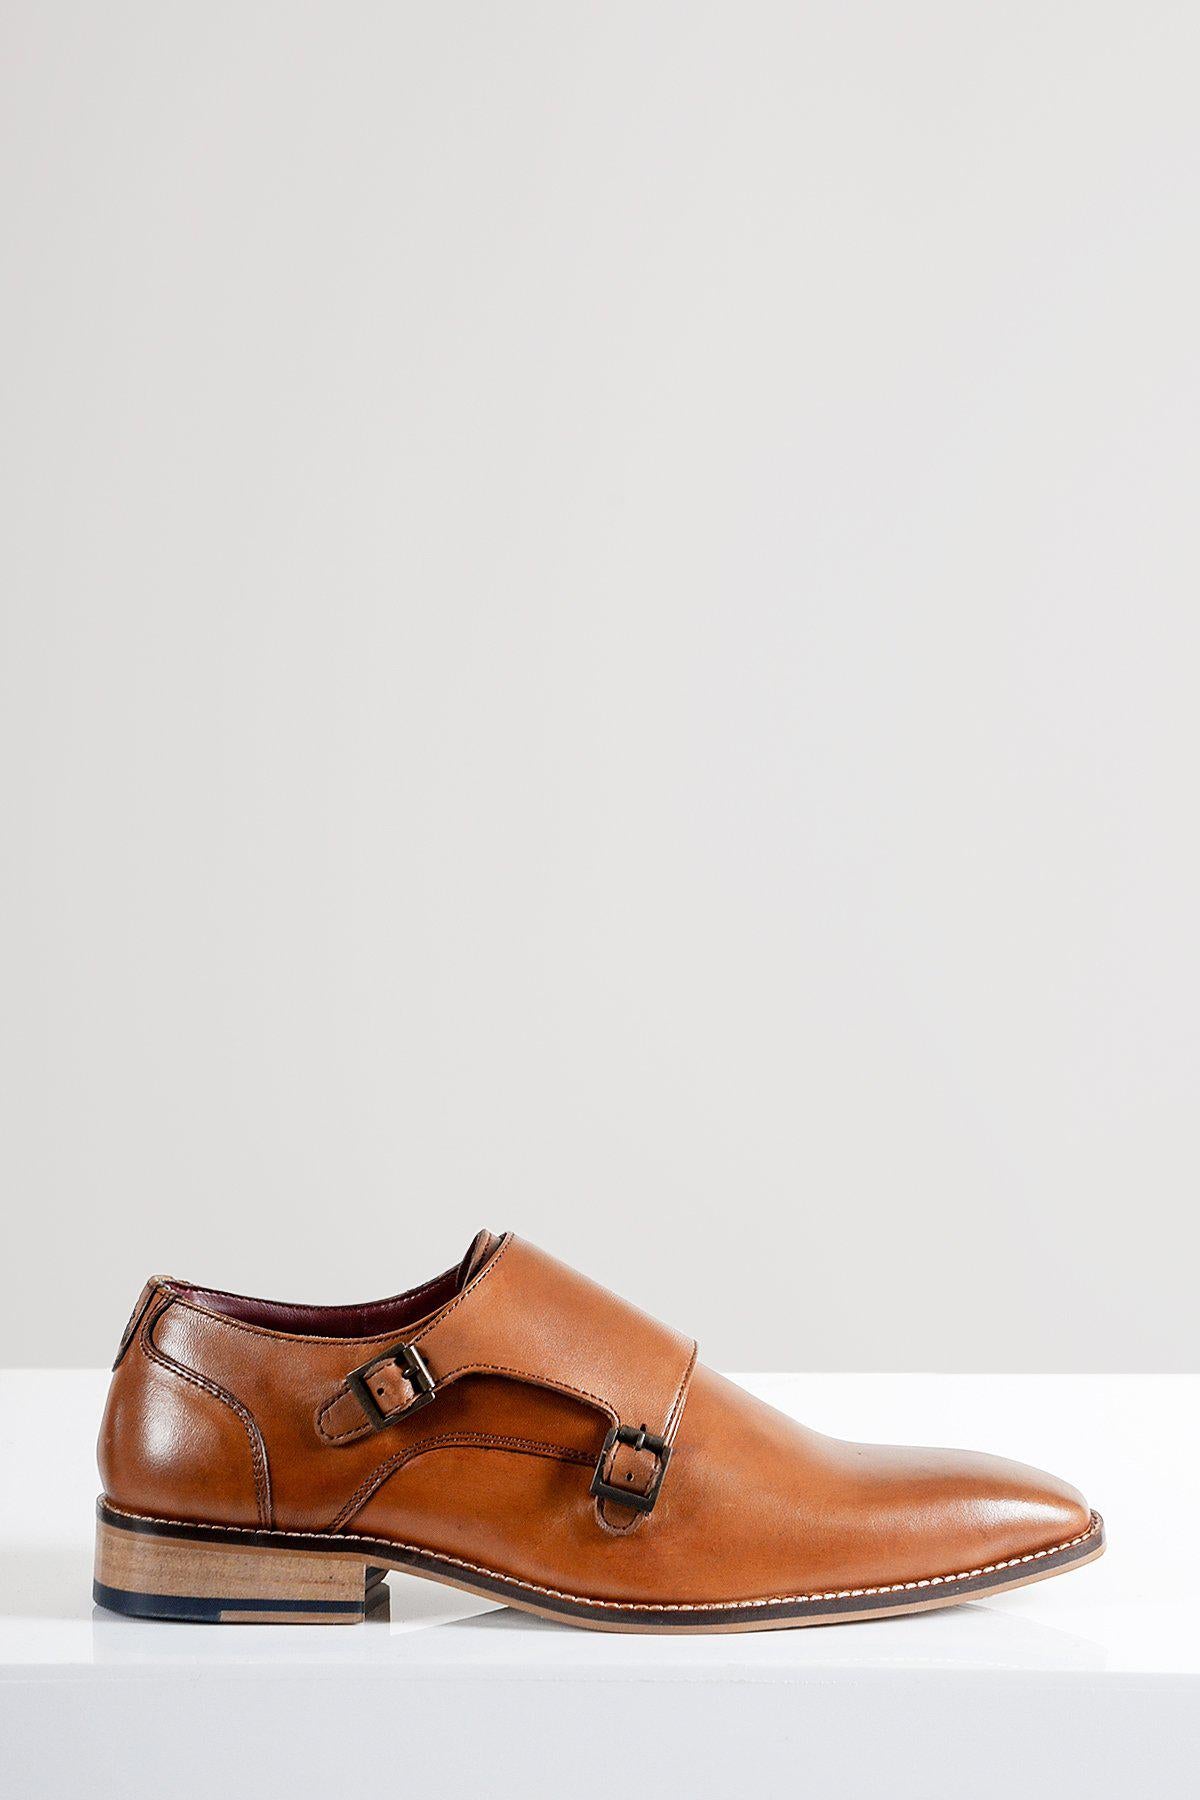 Men's Shoes | Leather Shoes for Men – Marc Darcy